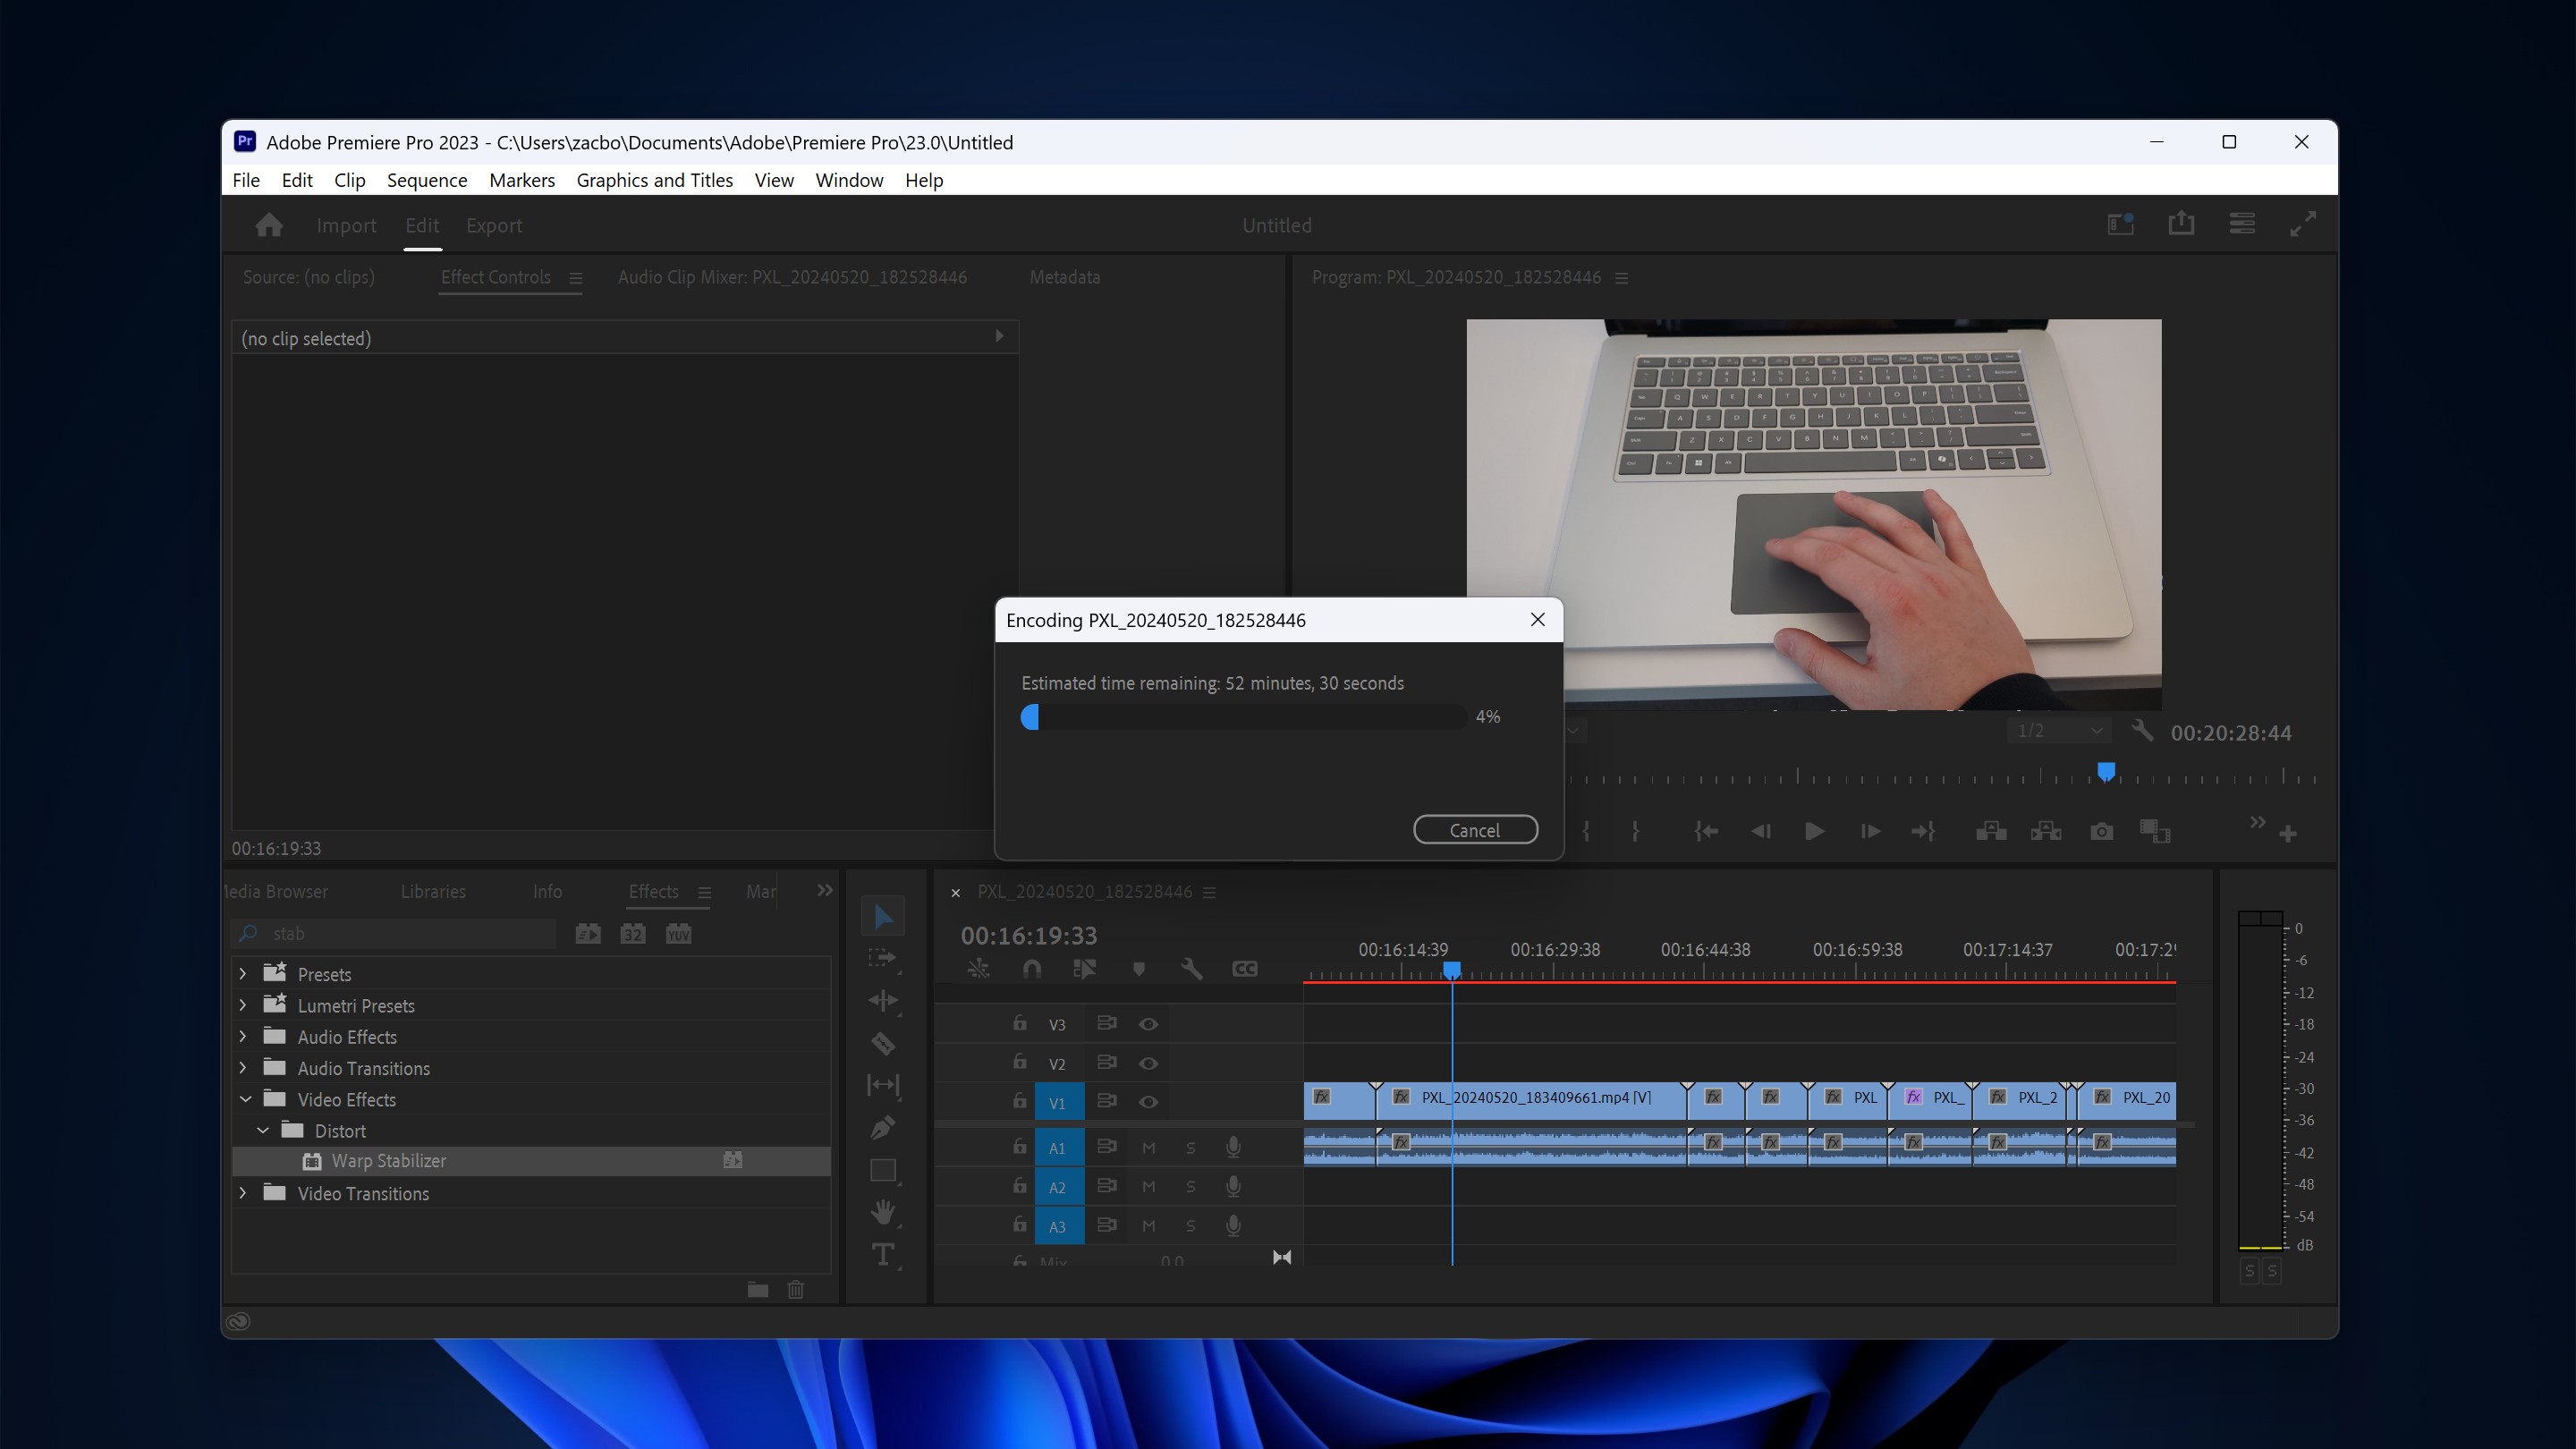 Adobe Premiere Pro running on Windows on Arm.